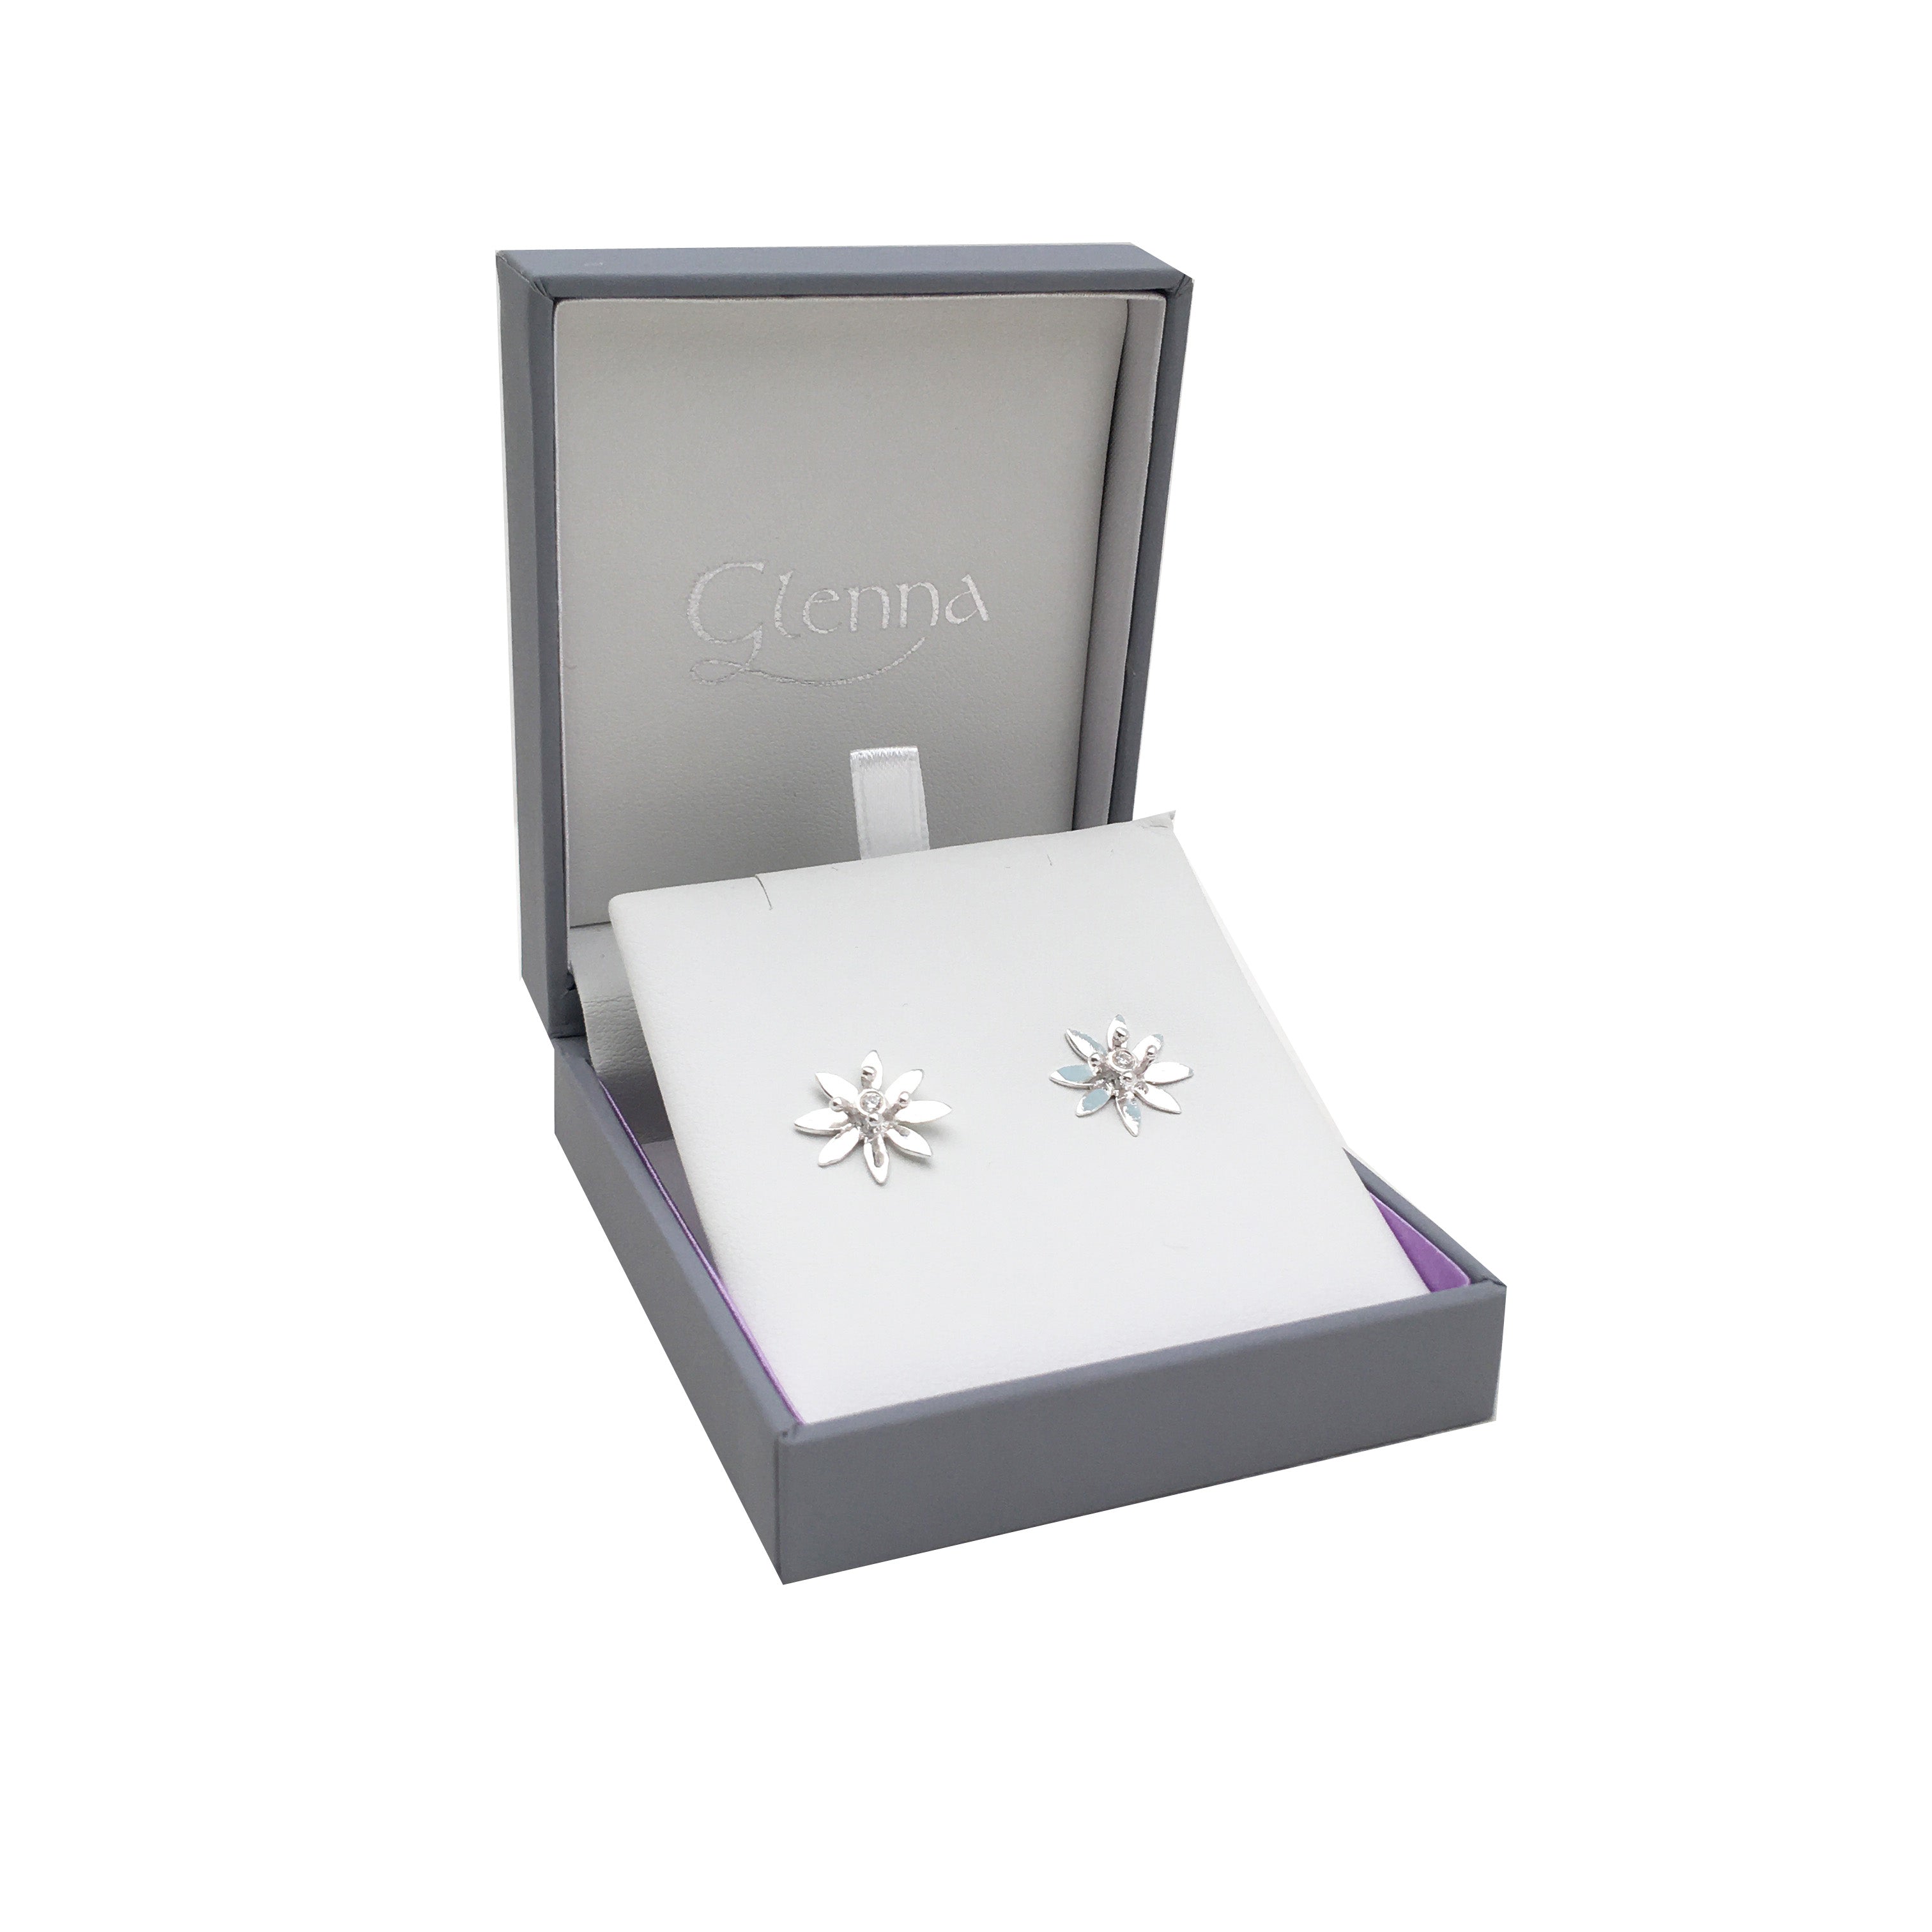 Allium silver stud earrings| Glenna Jewellery Scotland